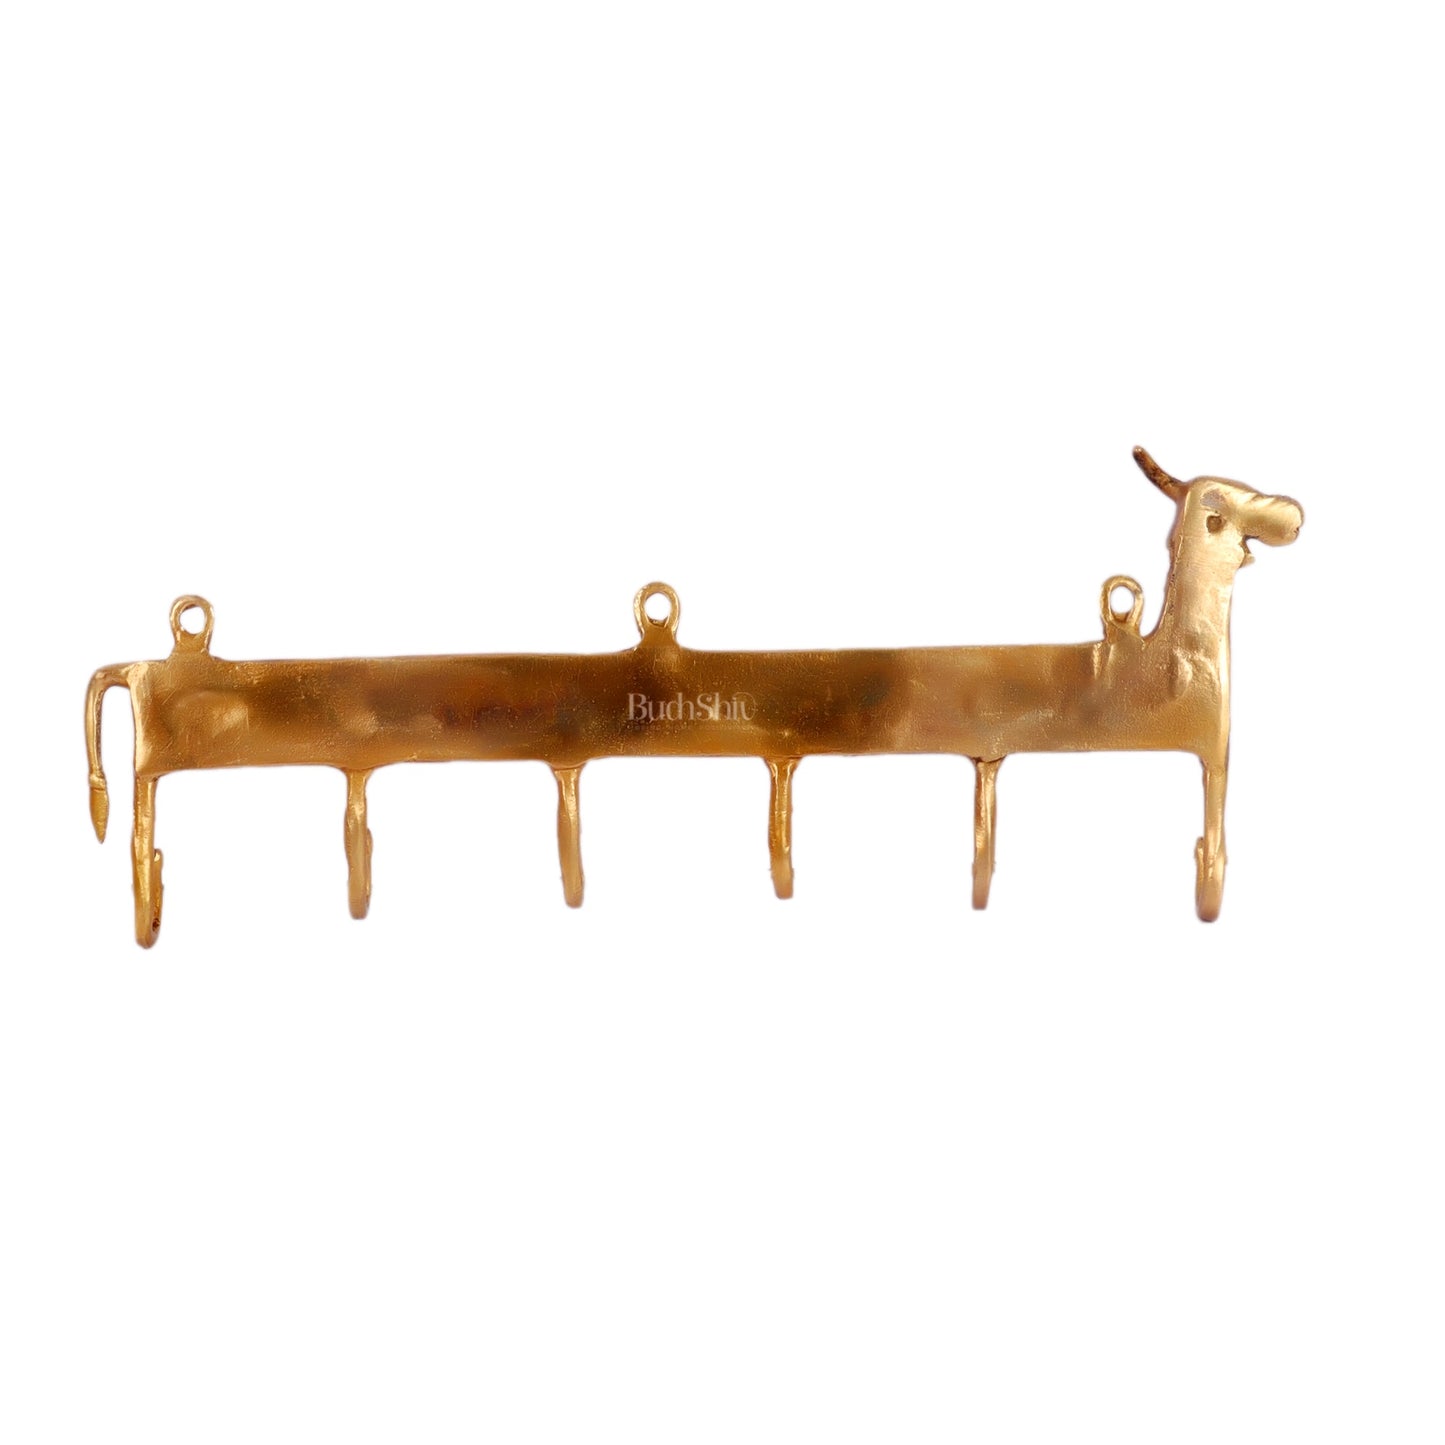 Brass Cow Dokra Key hanger - Budhshiv.com